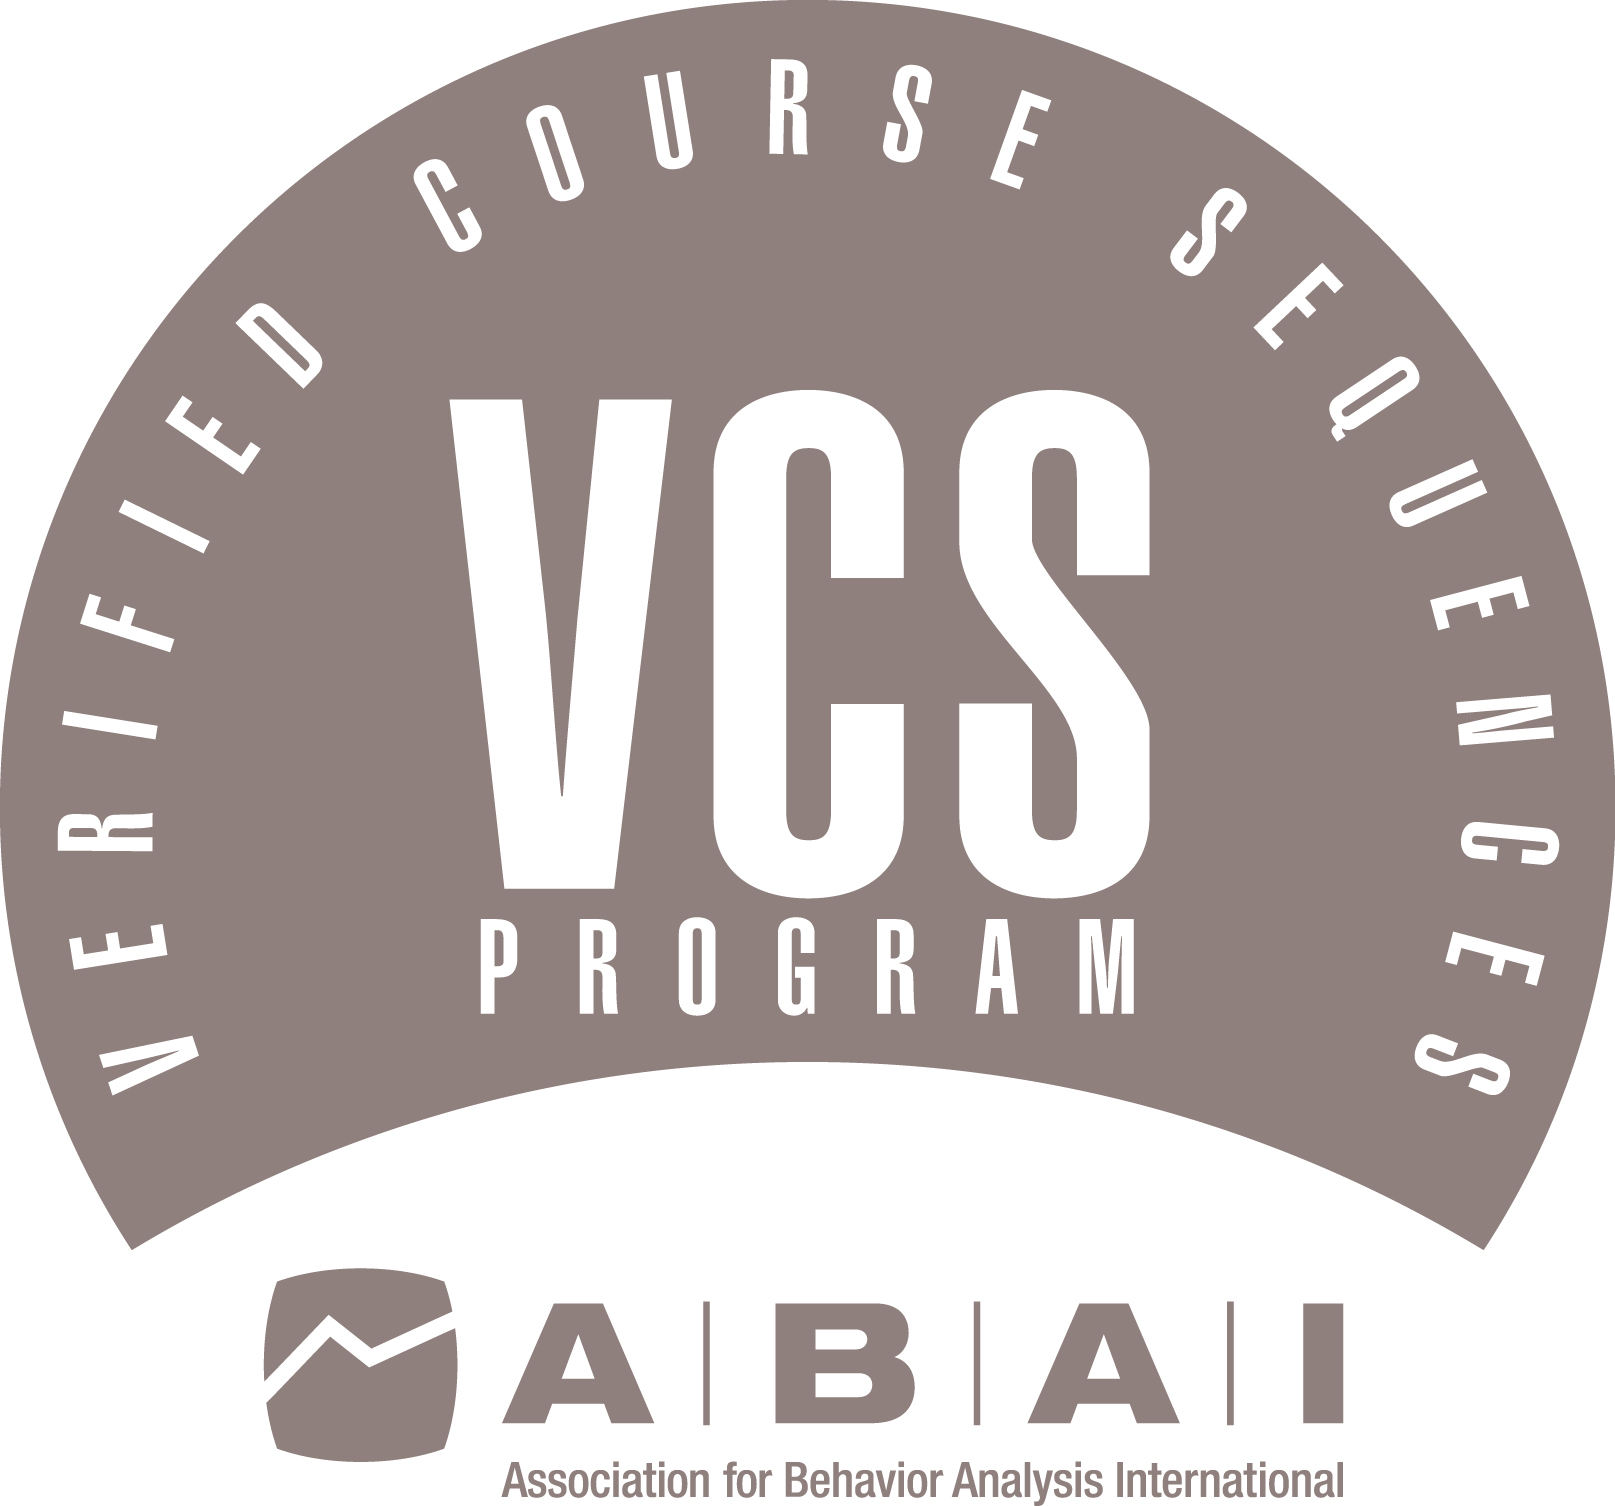 ABA program certification verification certificate